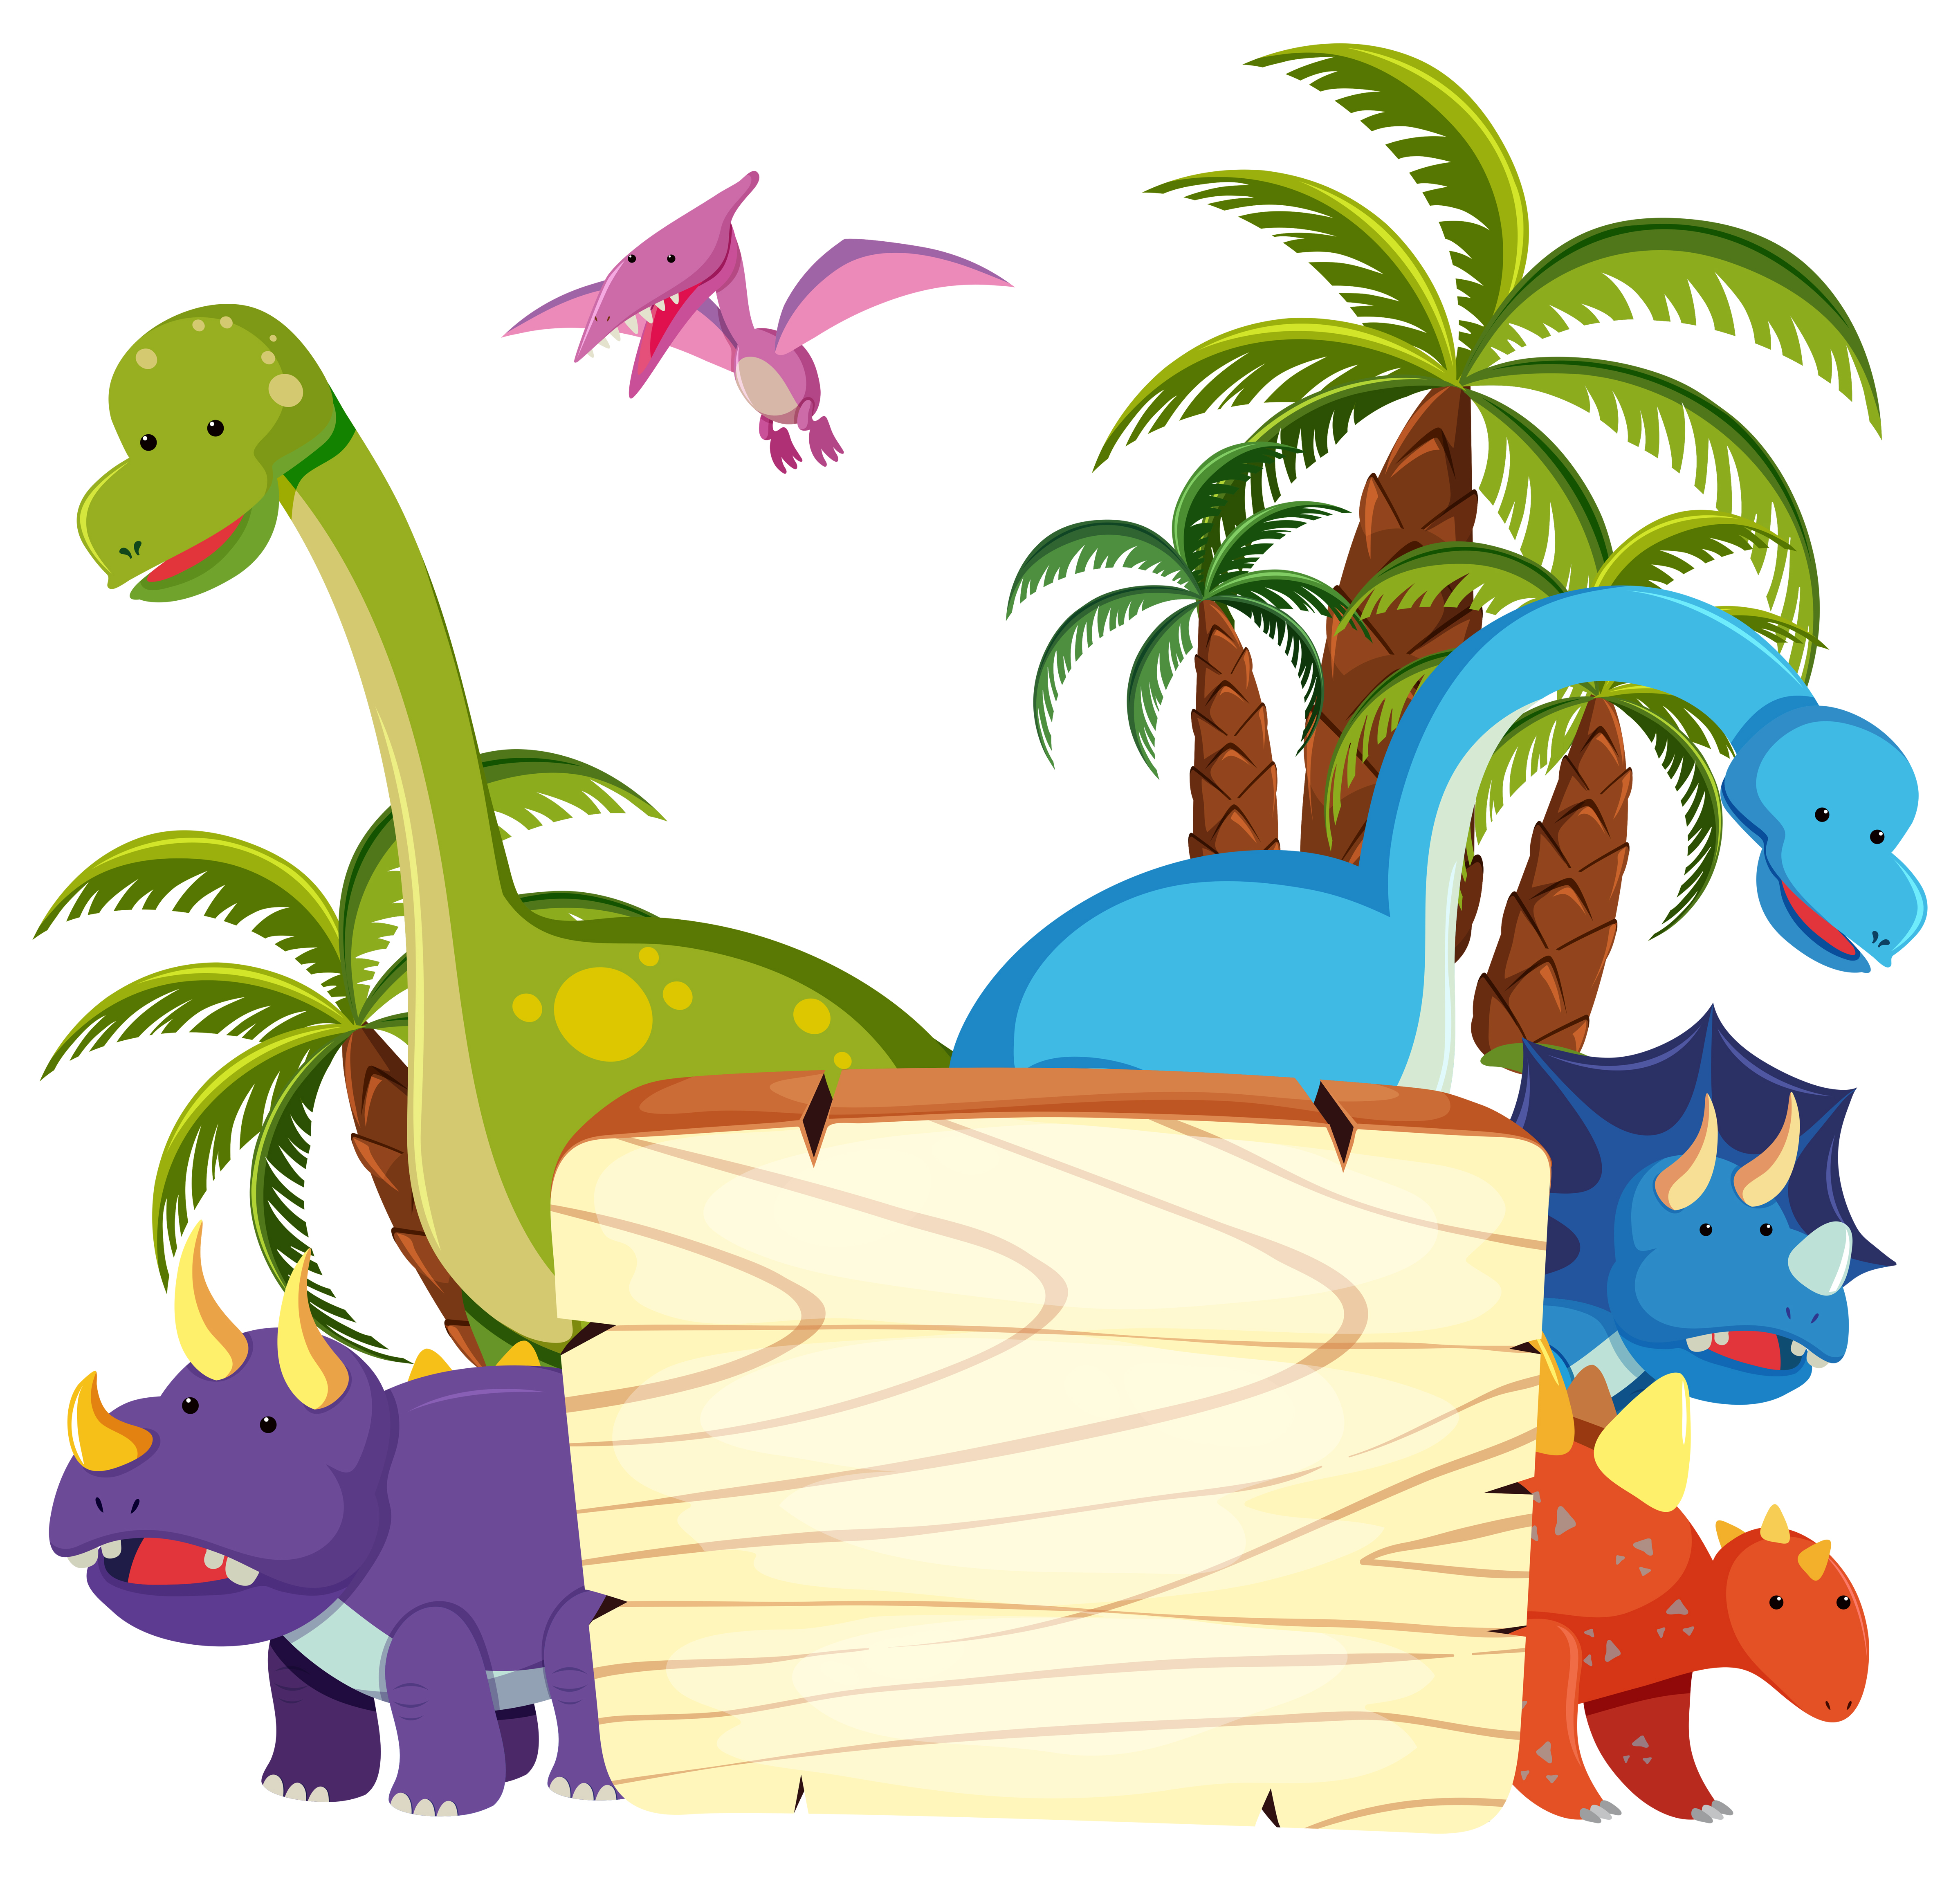 Download Cute dinosaur on wooden board - Download Free Vectors, Clipart Graphics & Vector Art